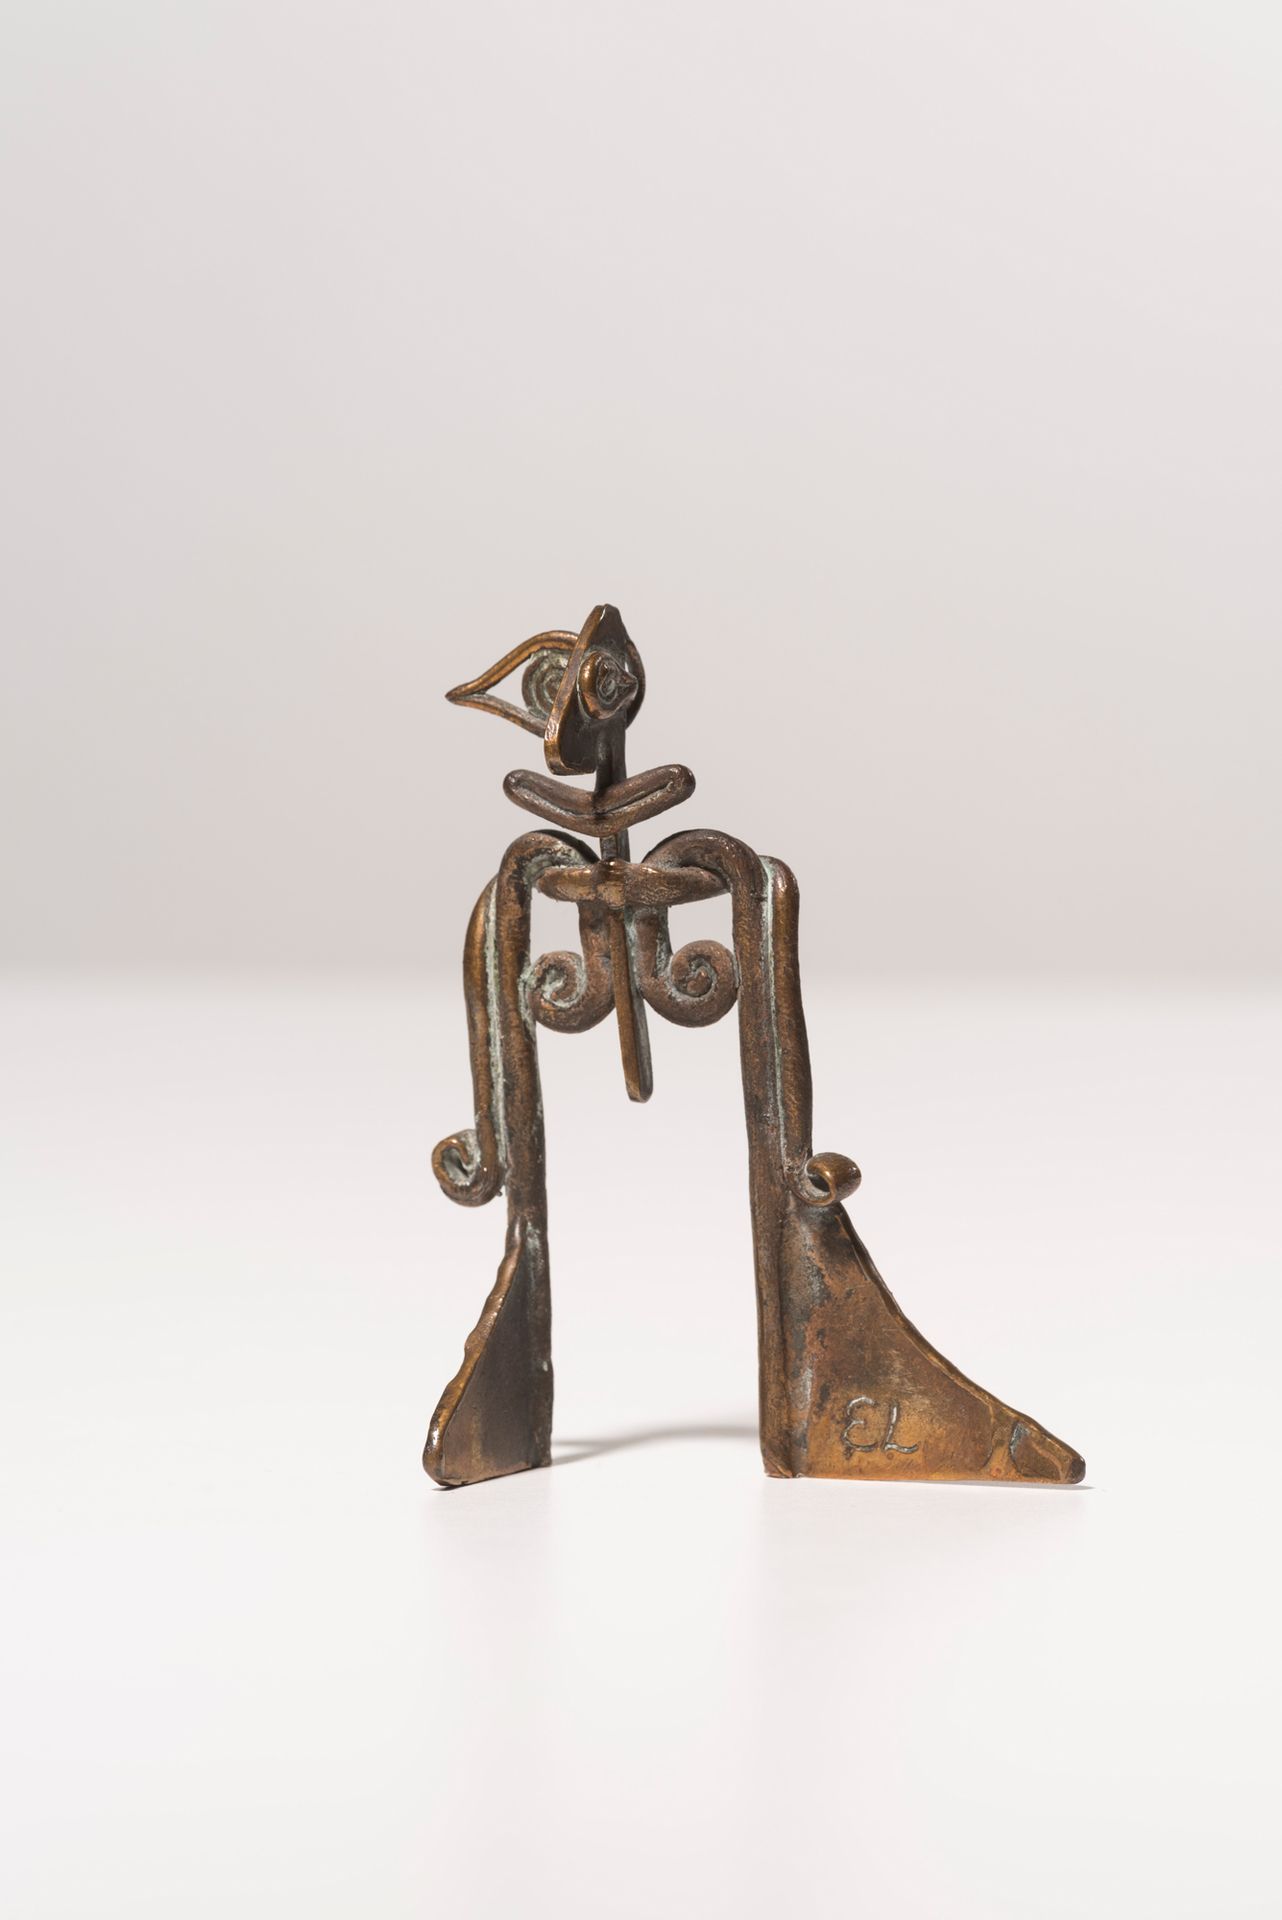 OLIVIER LELOUP (1951-2000) Hommage an Picasso.
Bronze. Monogrammiert. 
Brons. Ee&hellip;